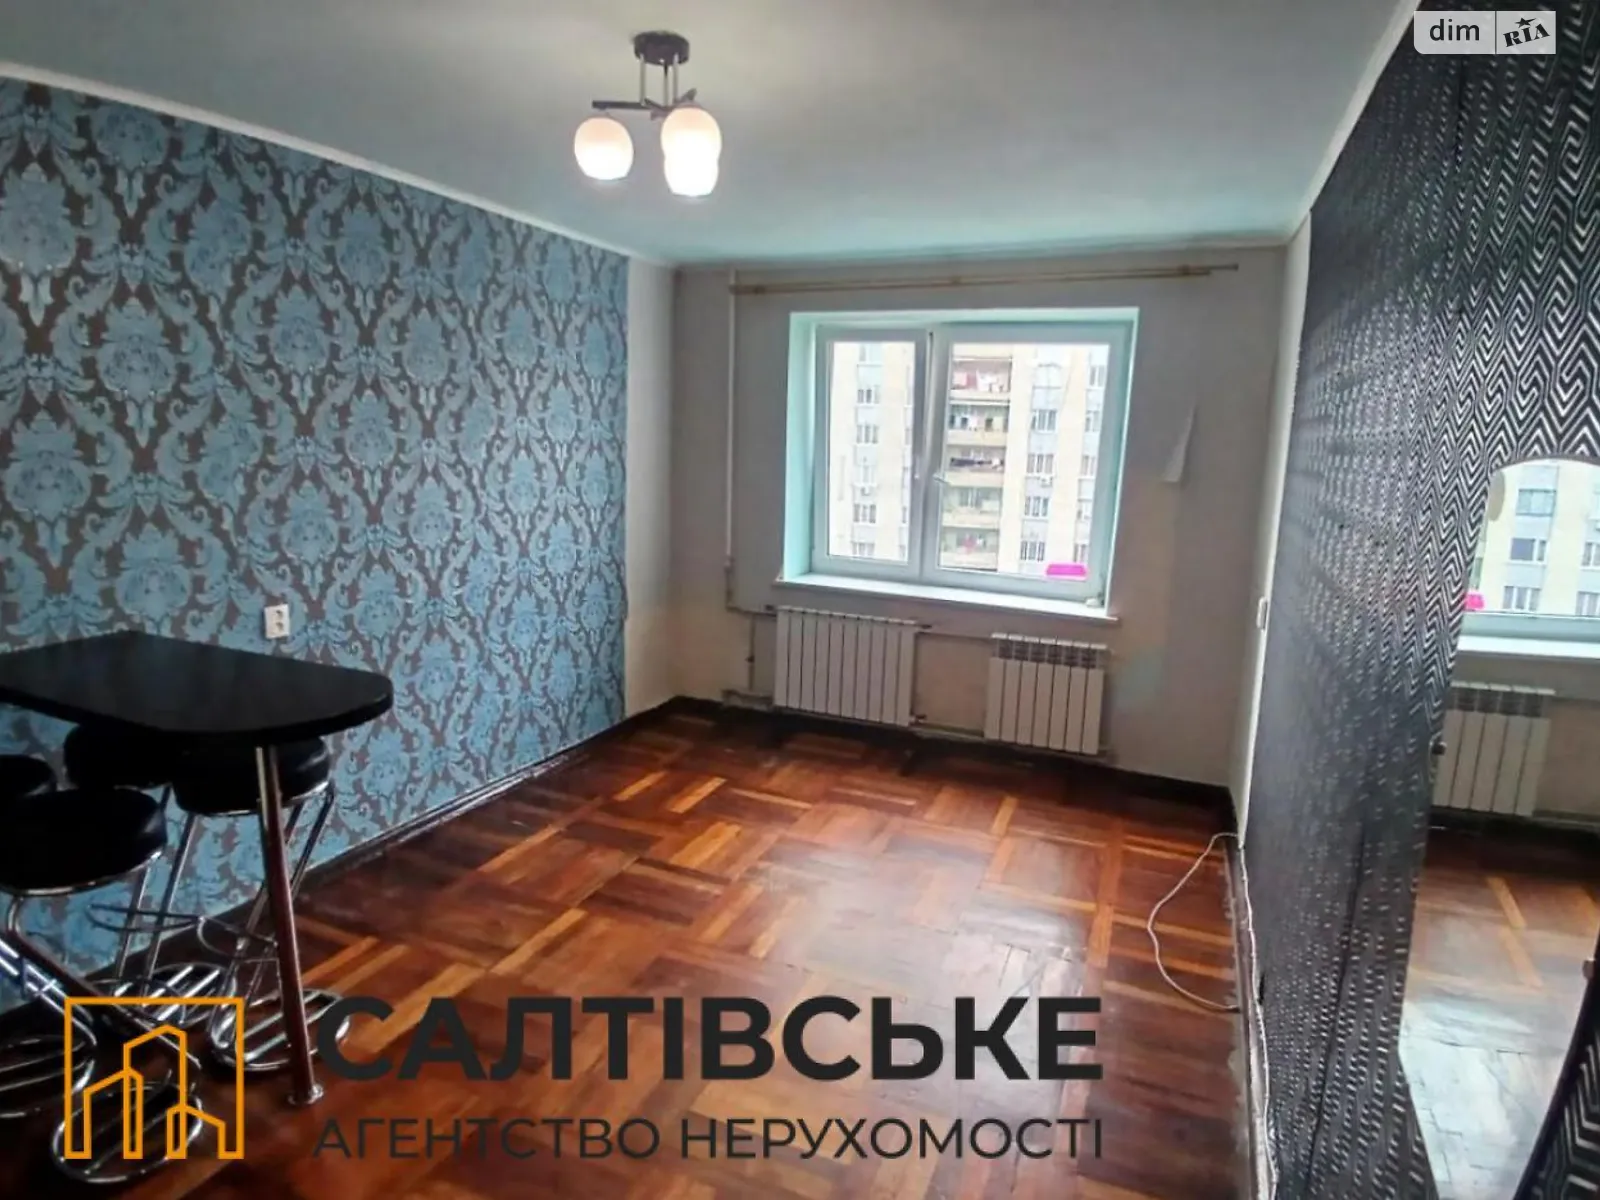 Продается комната 26 кв. м в Харькове - фото 2